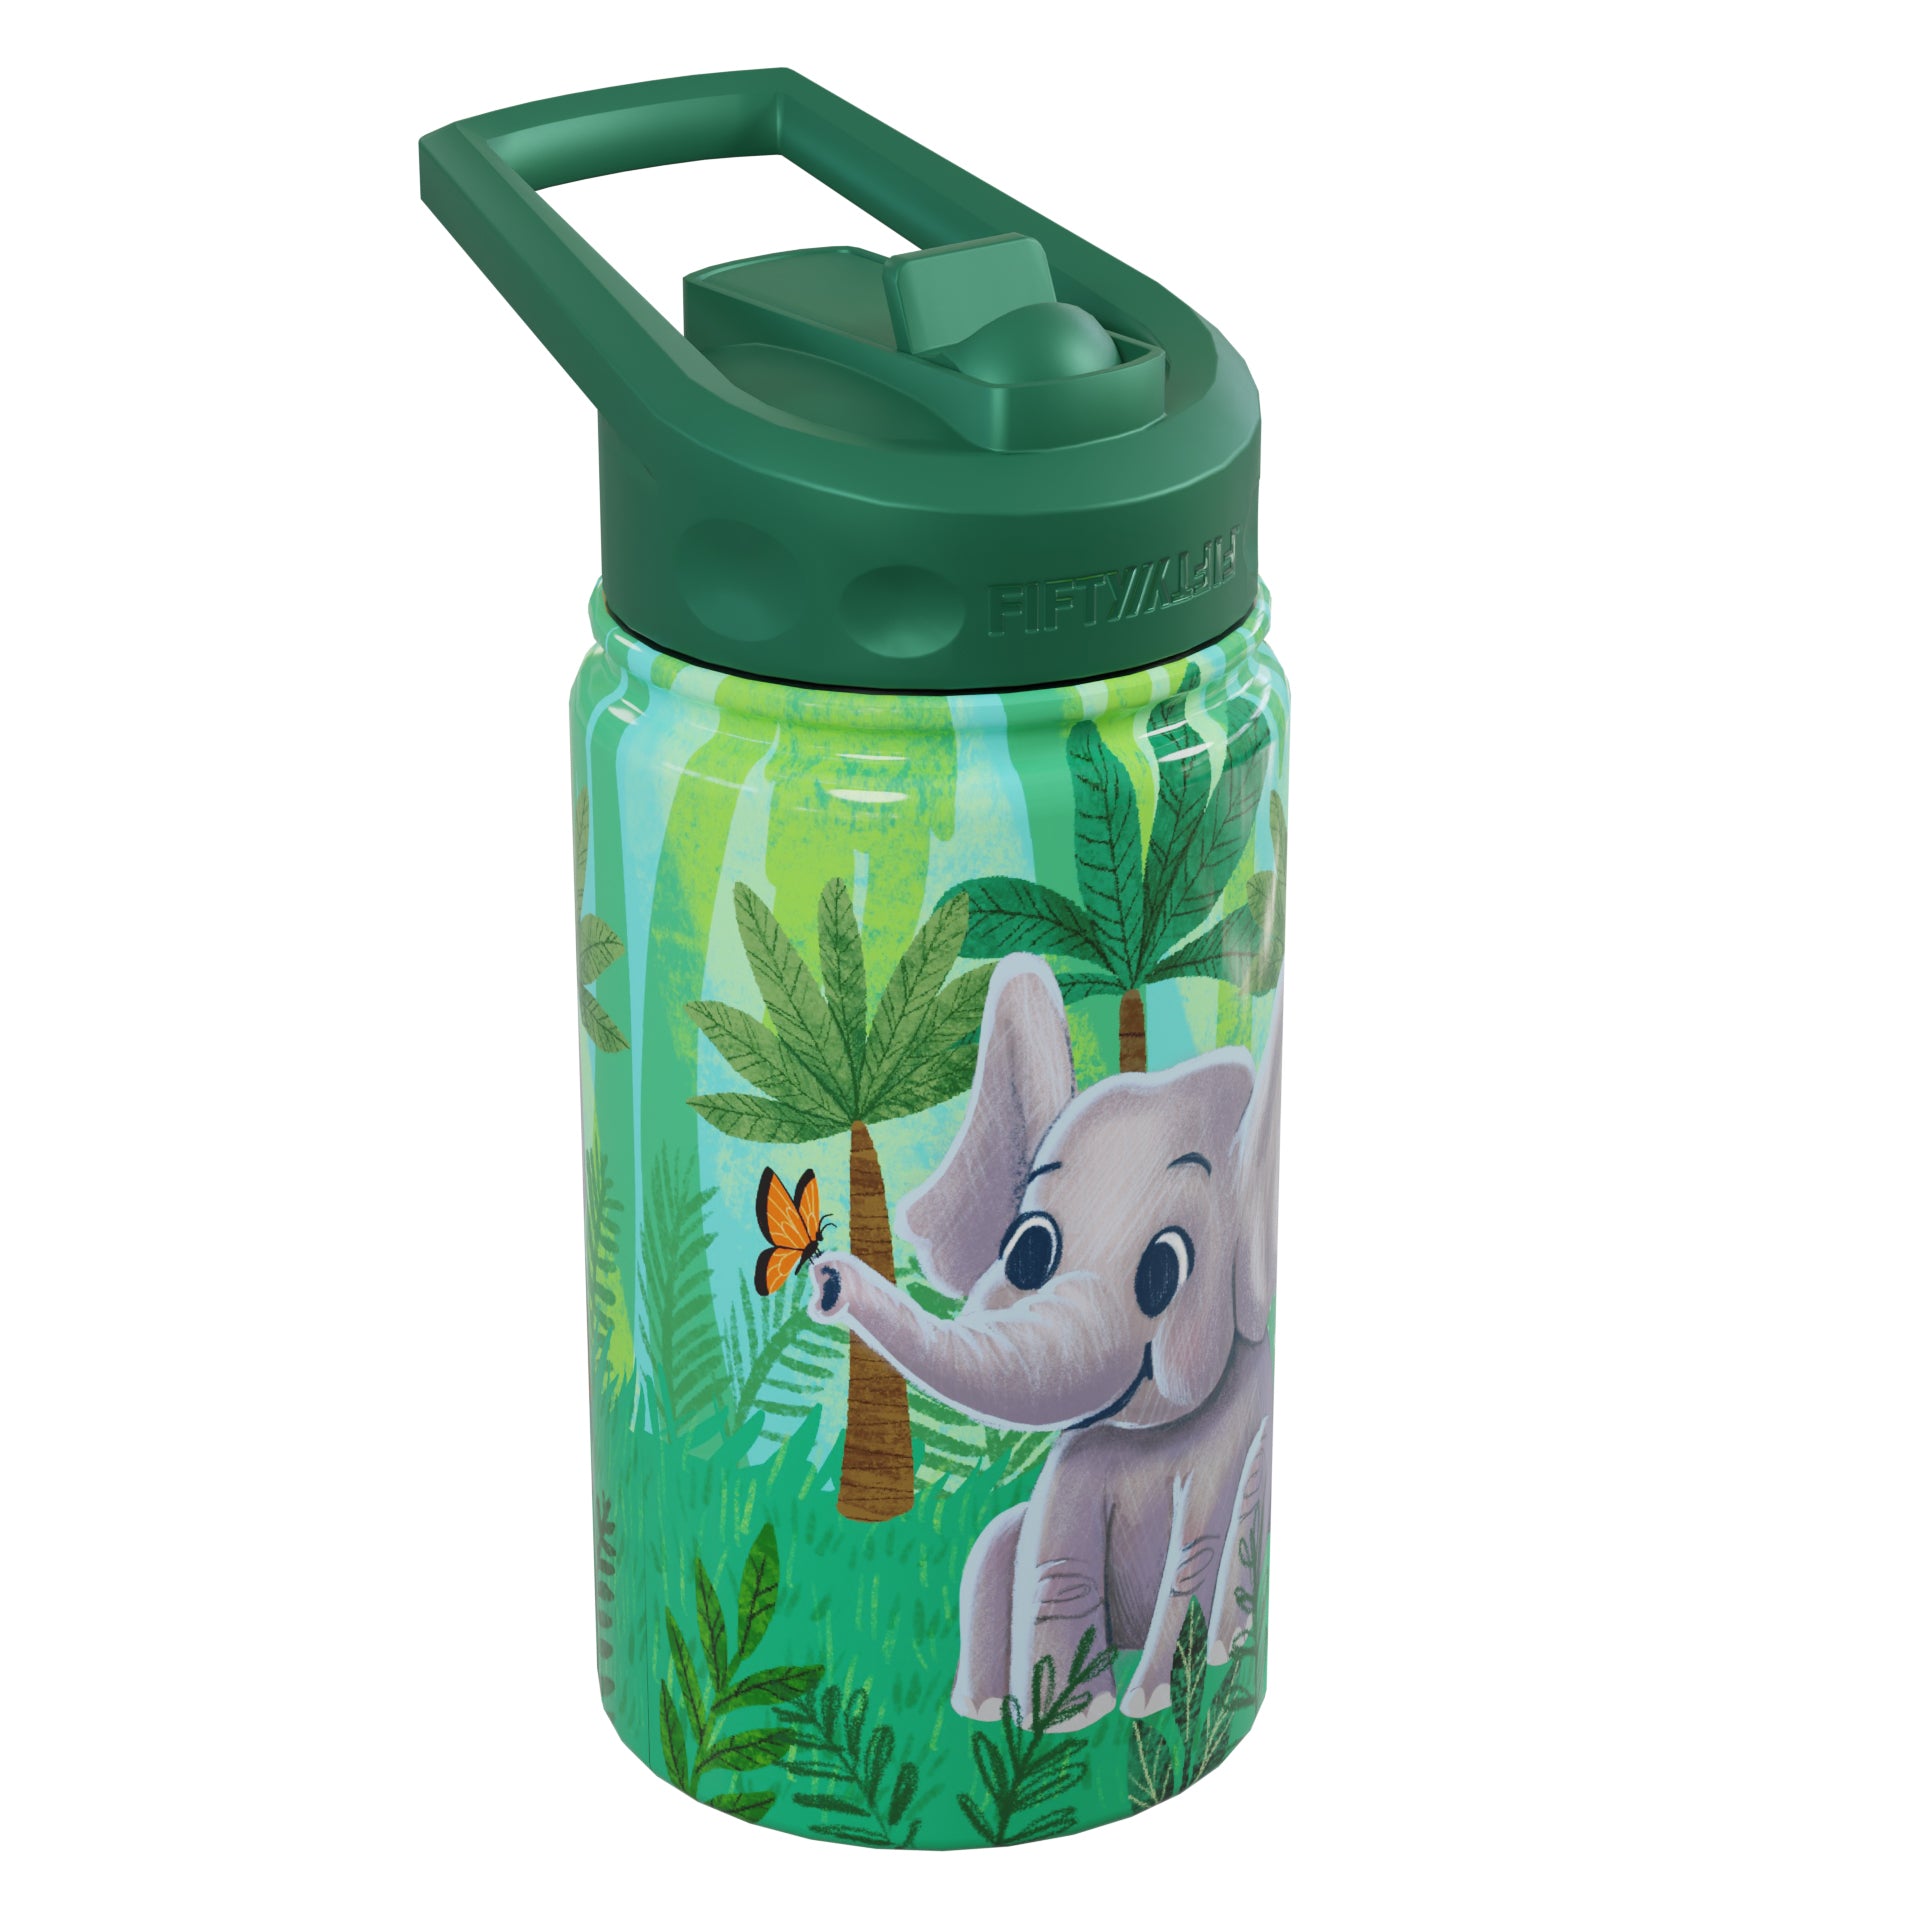 Colorful Elephant Cartoon Kids Birthday Water Bott Water Bottle Label